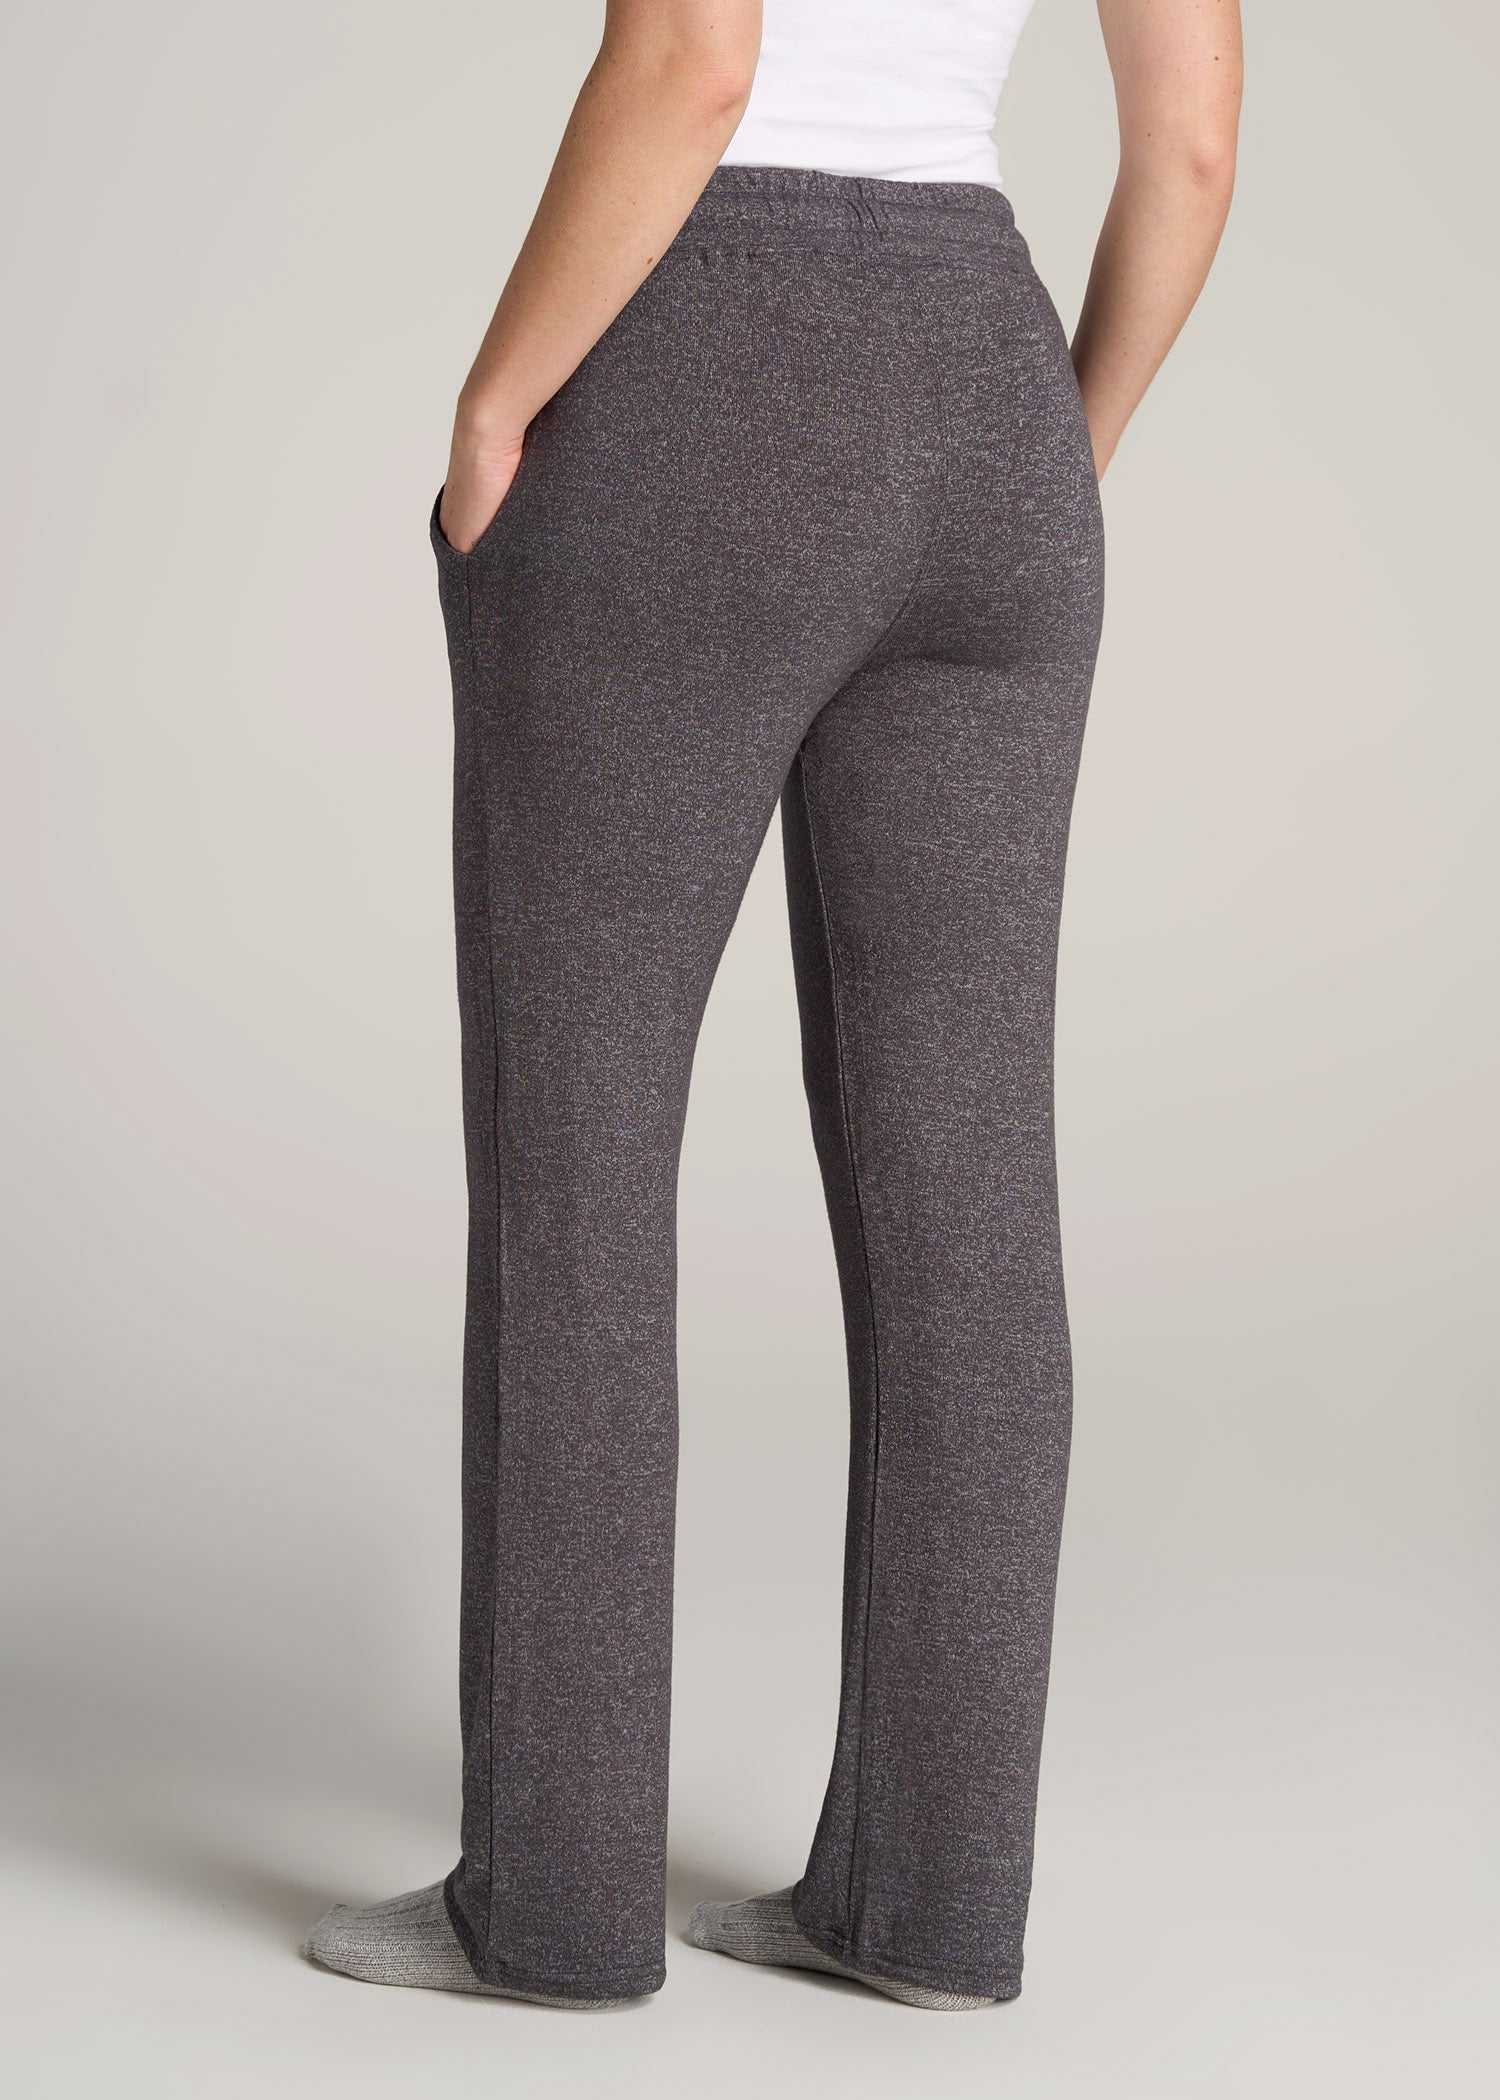 Women's Tall Lounge Pant Open Bottom Charcoal